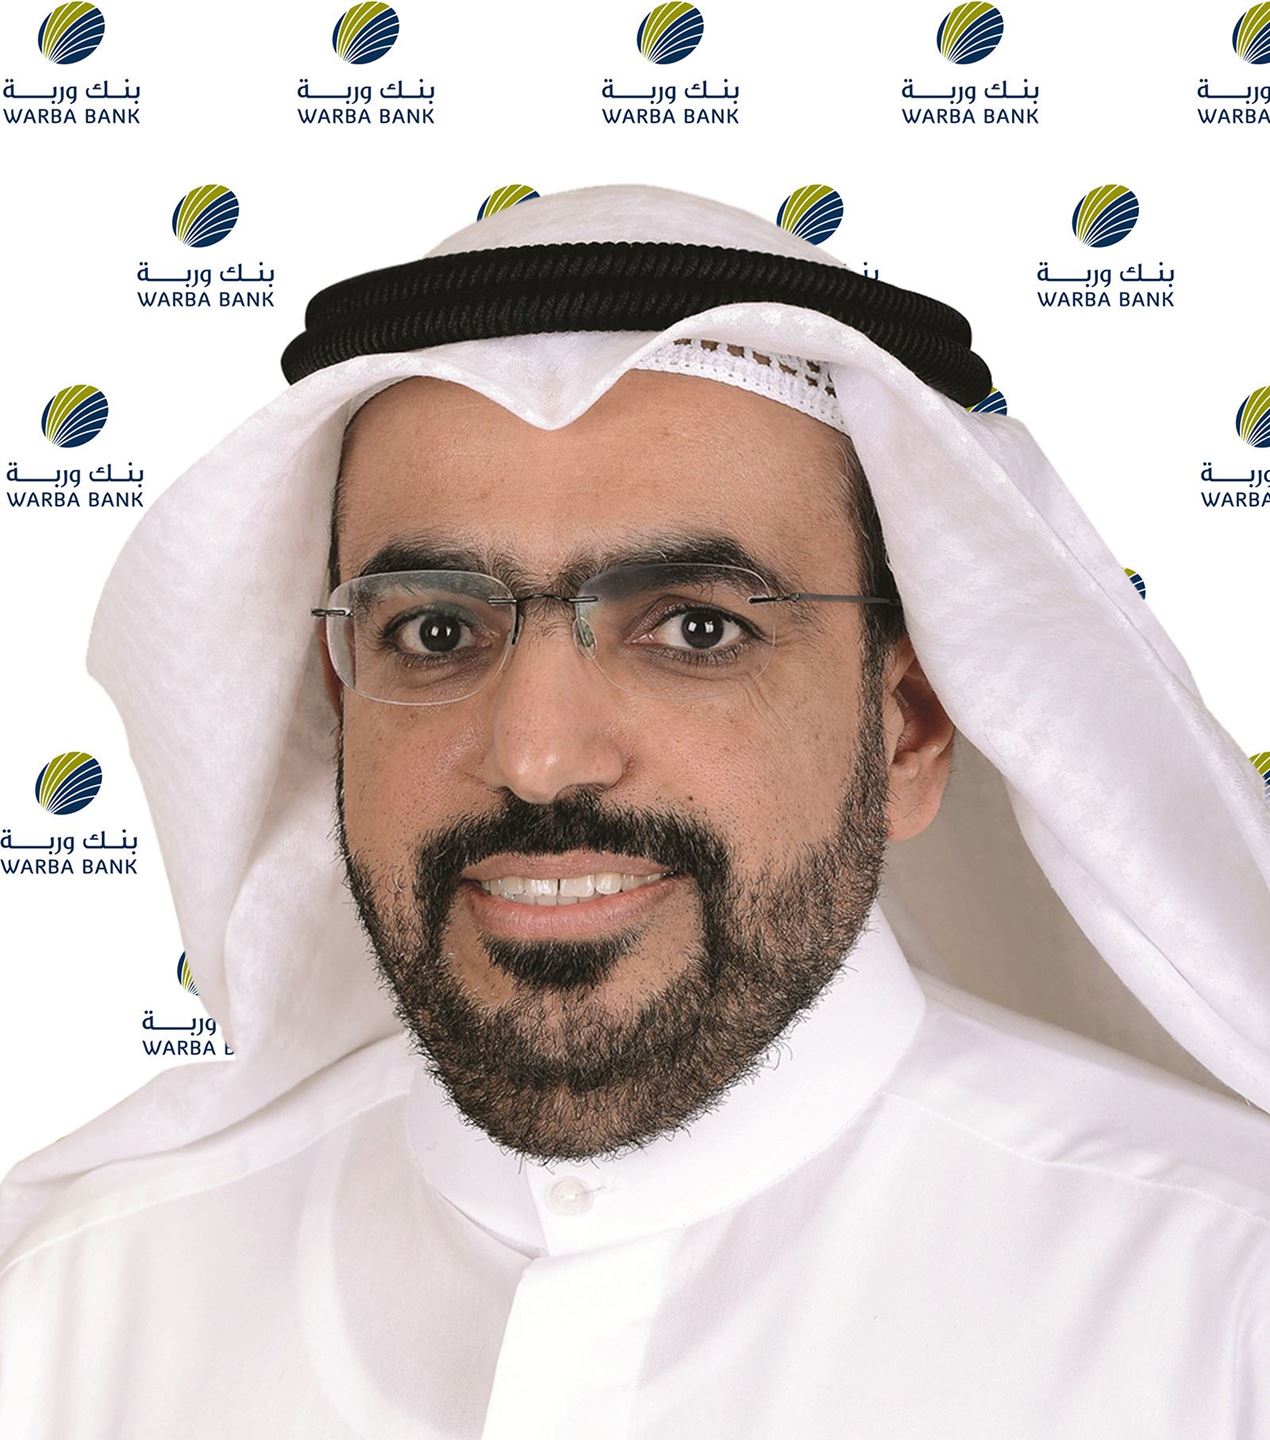 Mr. Shaheen Hamad Al-Ghanem, Warba Bank's CEO